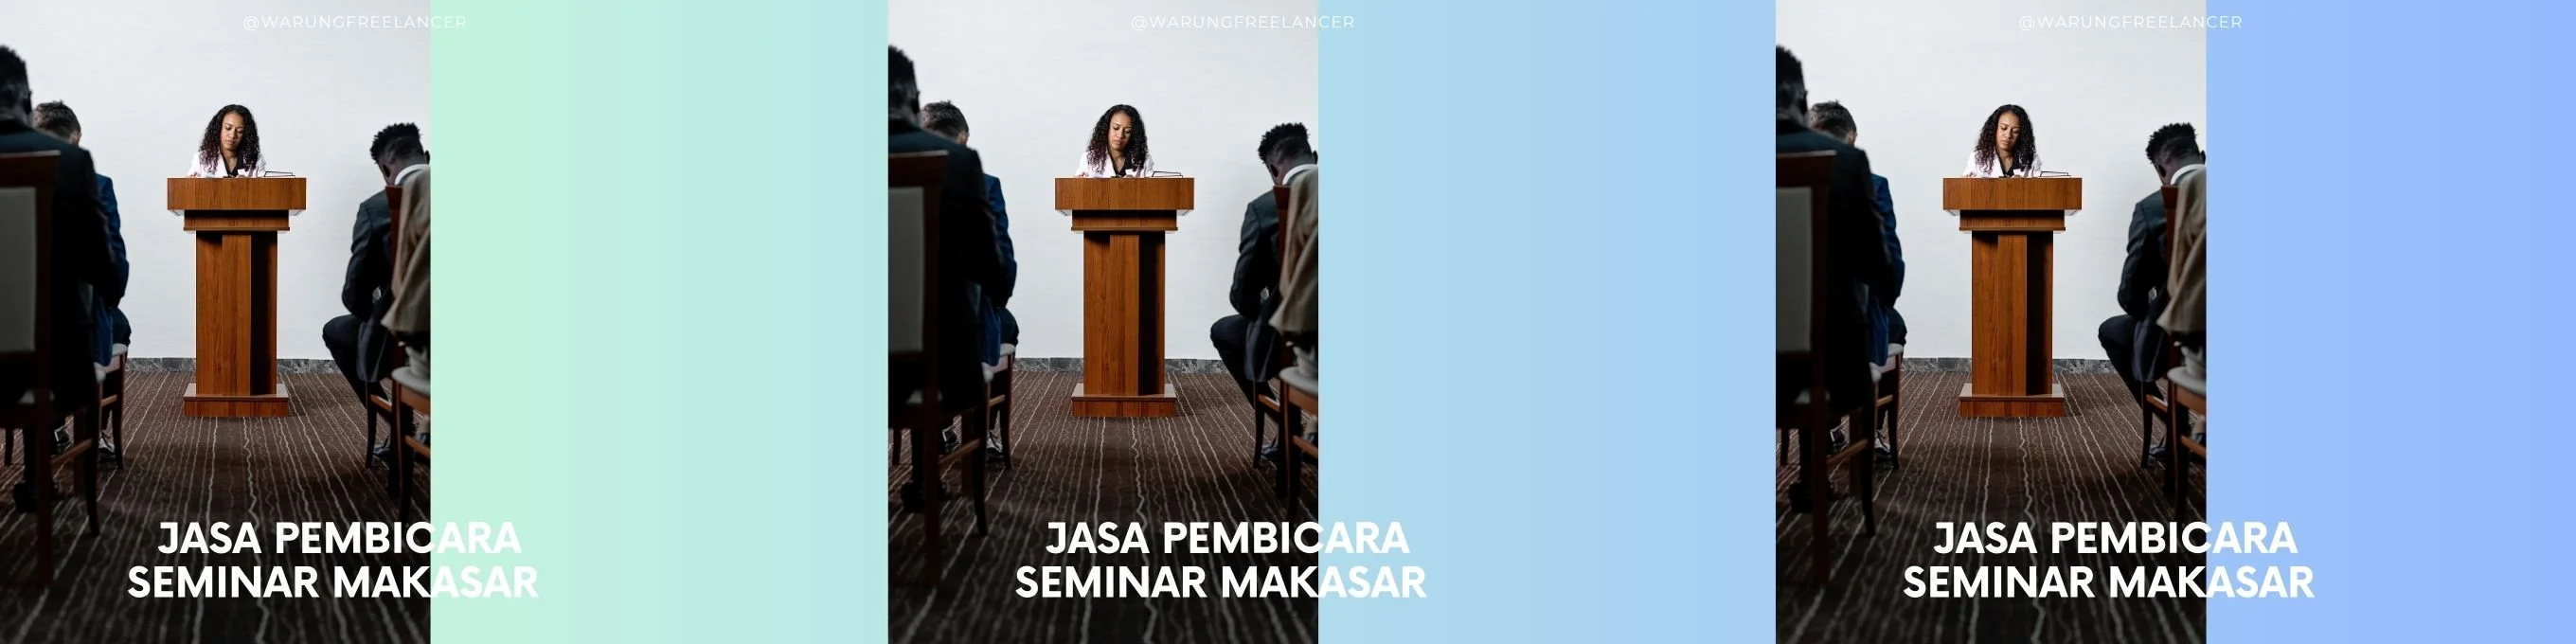 Jasa Pembicara Seminar Makassar 